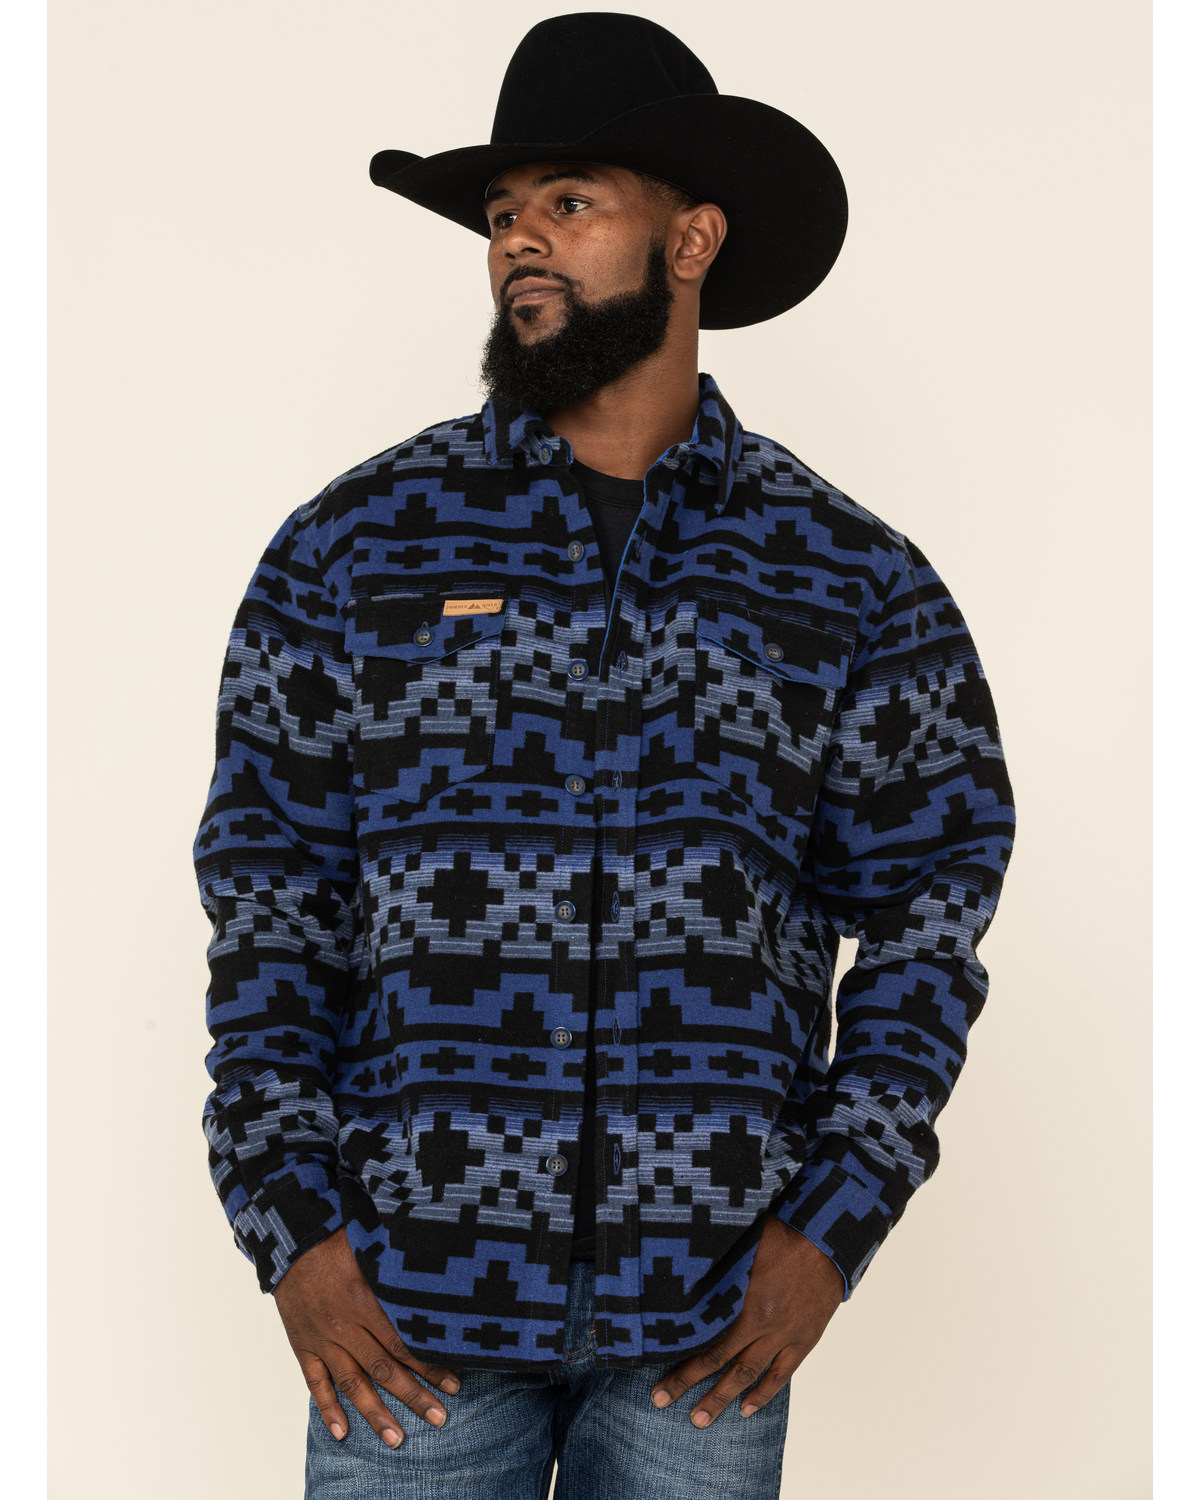 Powder River Outfitters Men's Southwestern Print Jacquard Shirt Jacket